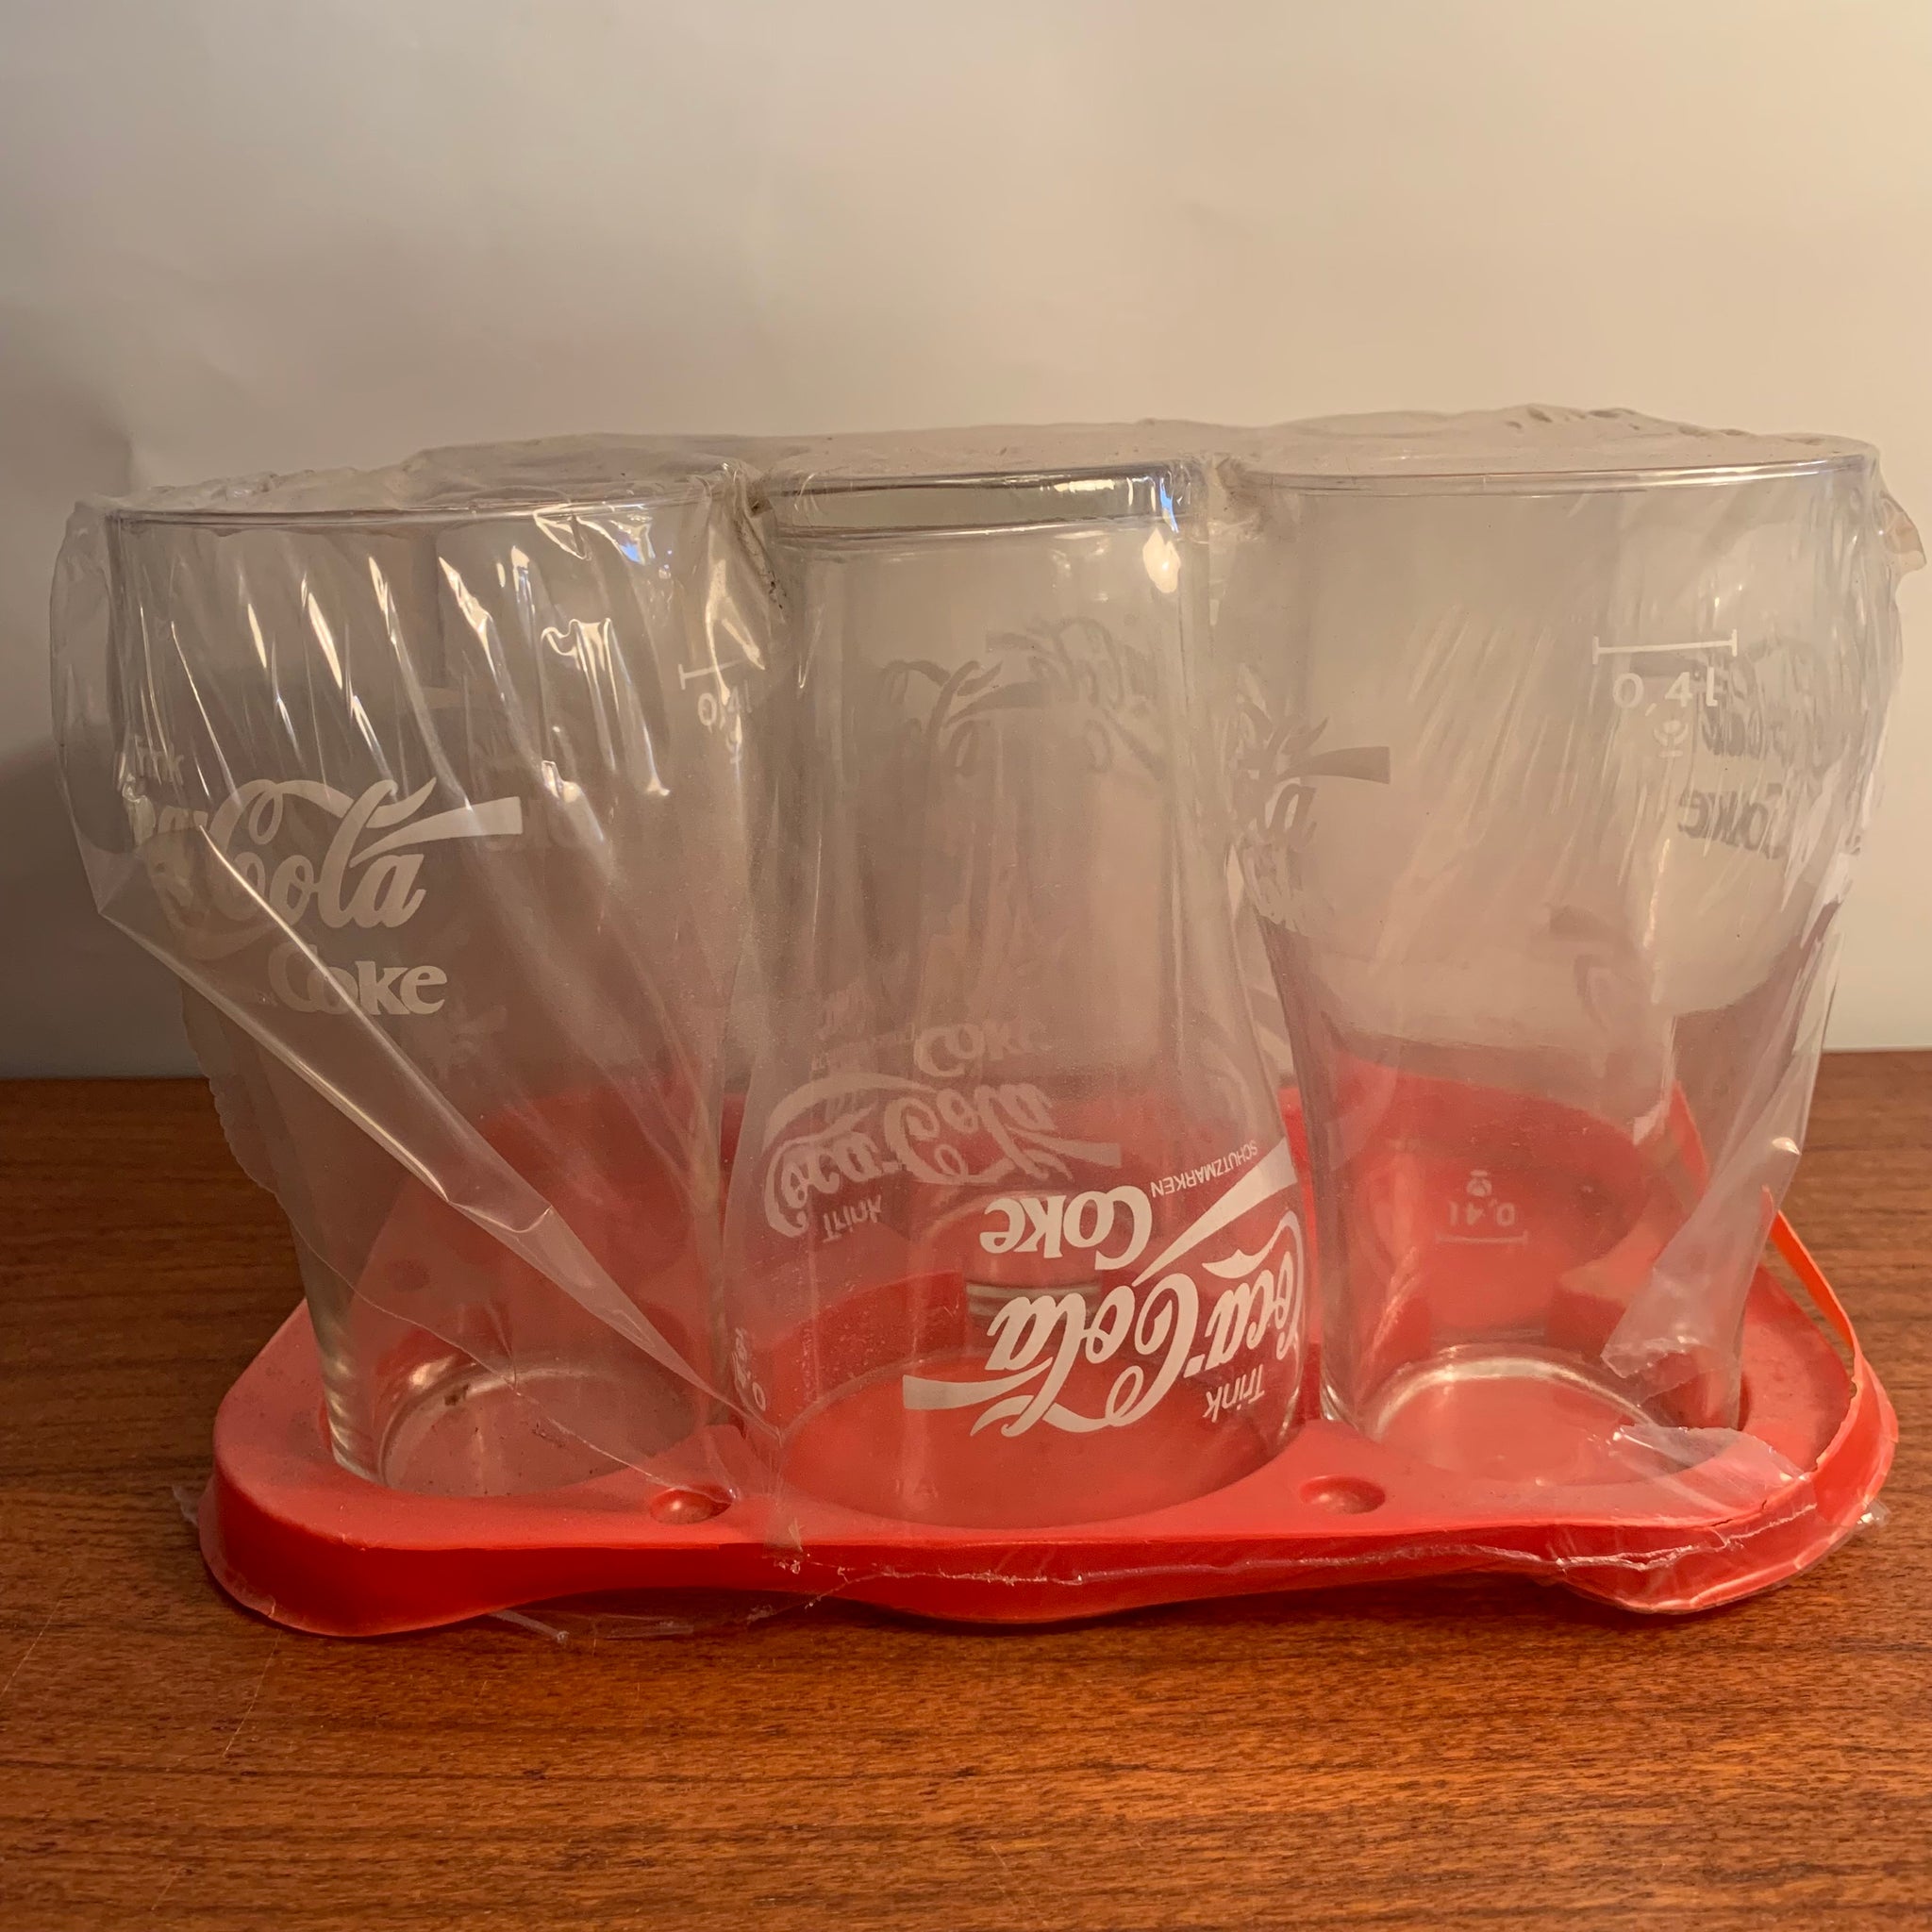 Coca Cola Gläser Coke Sechserpack